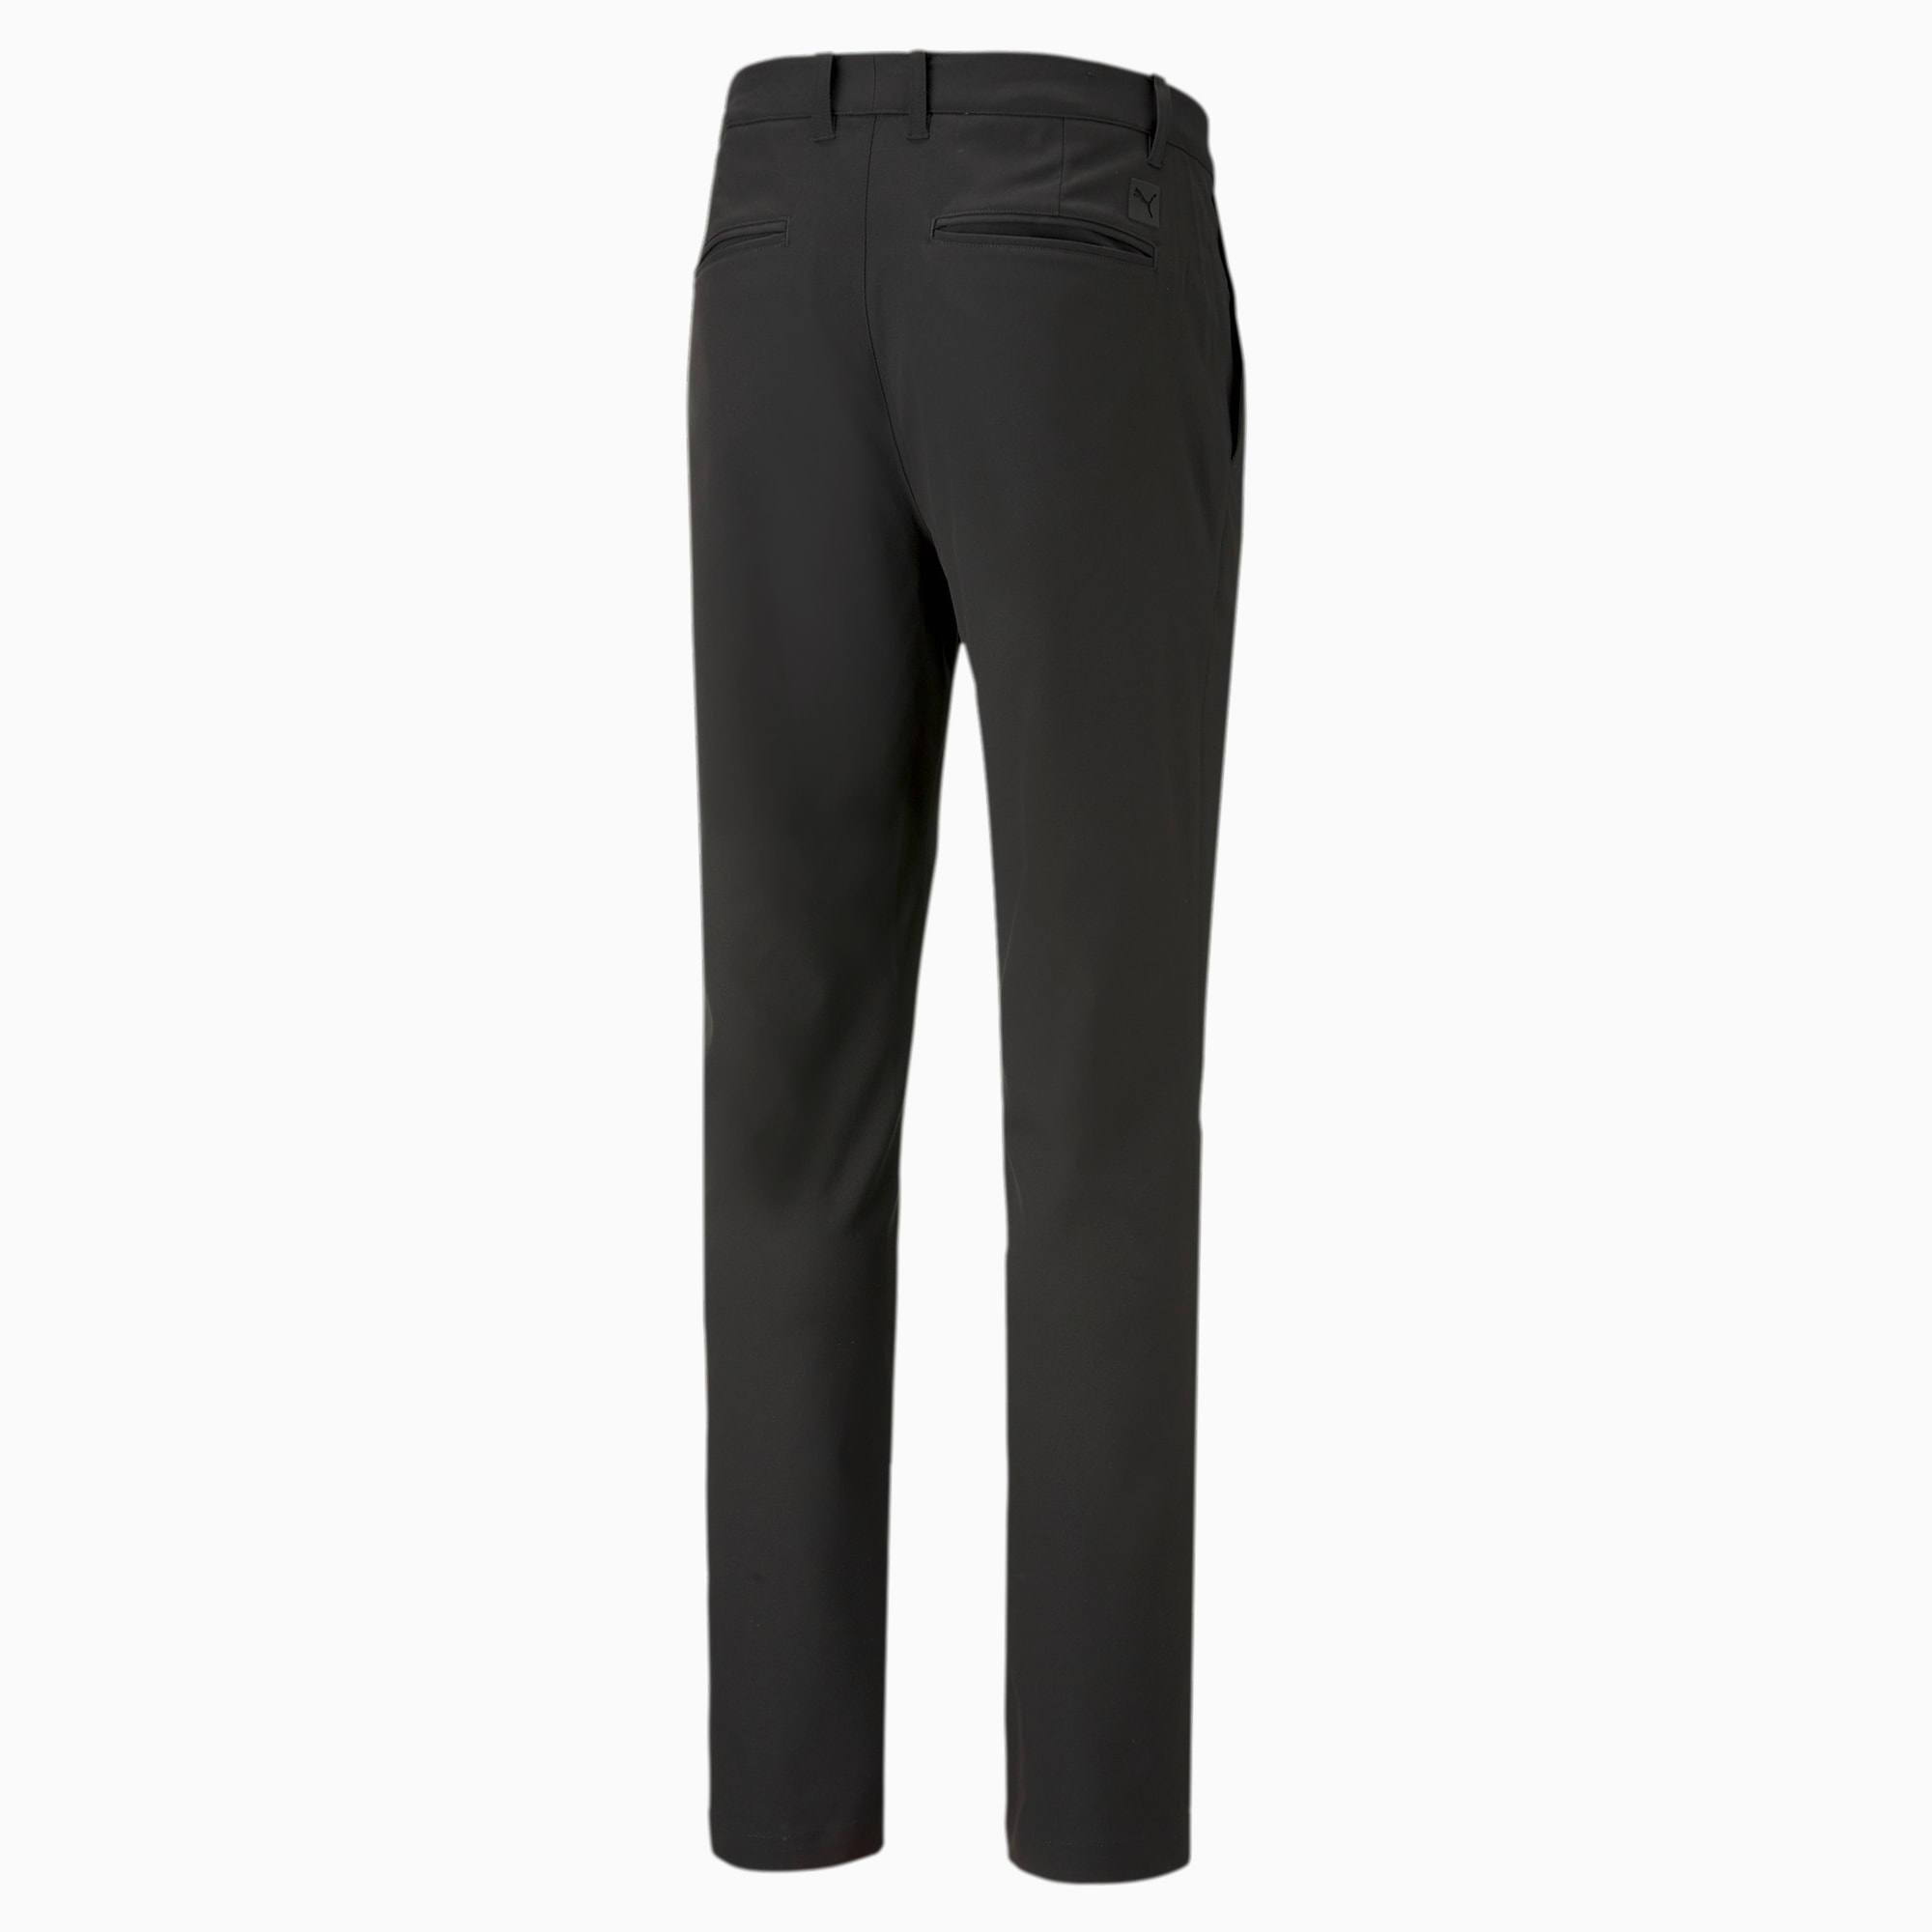 PUMA Dealer Tailored Golf Pants Men, Black, Size 32/36, Clothing